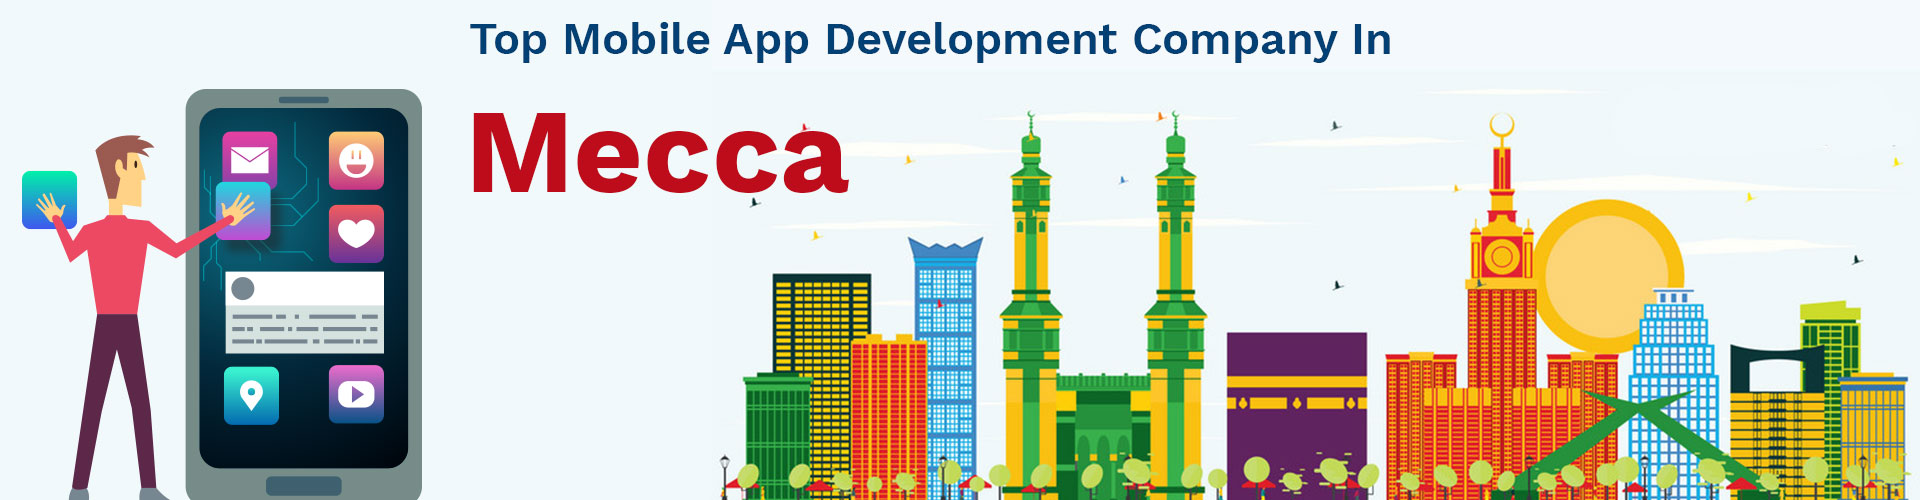 mobile app development company mecca